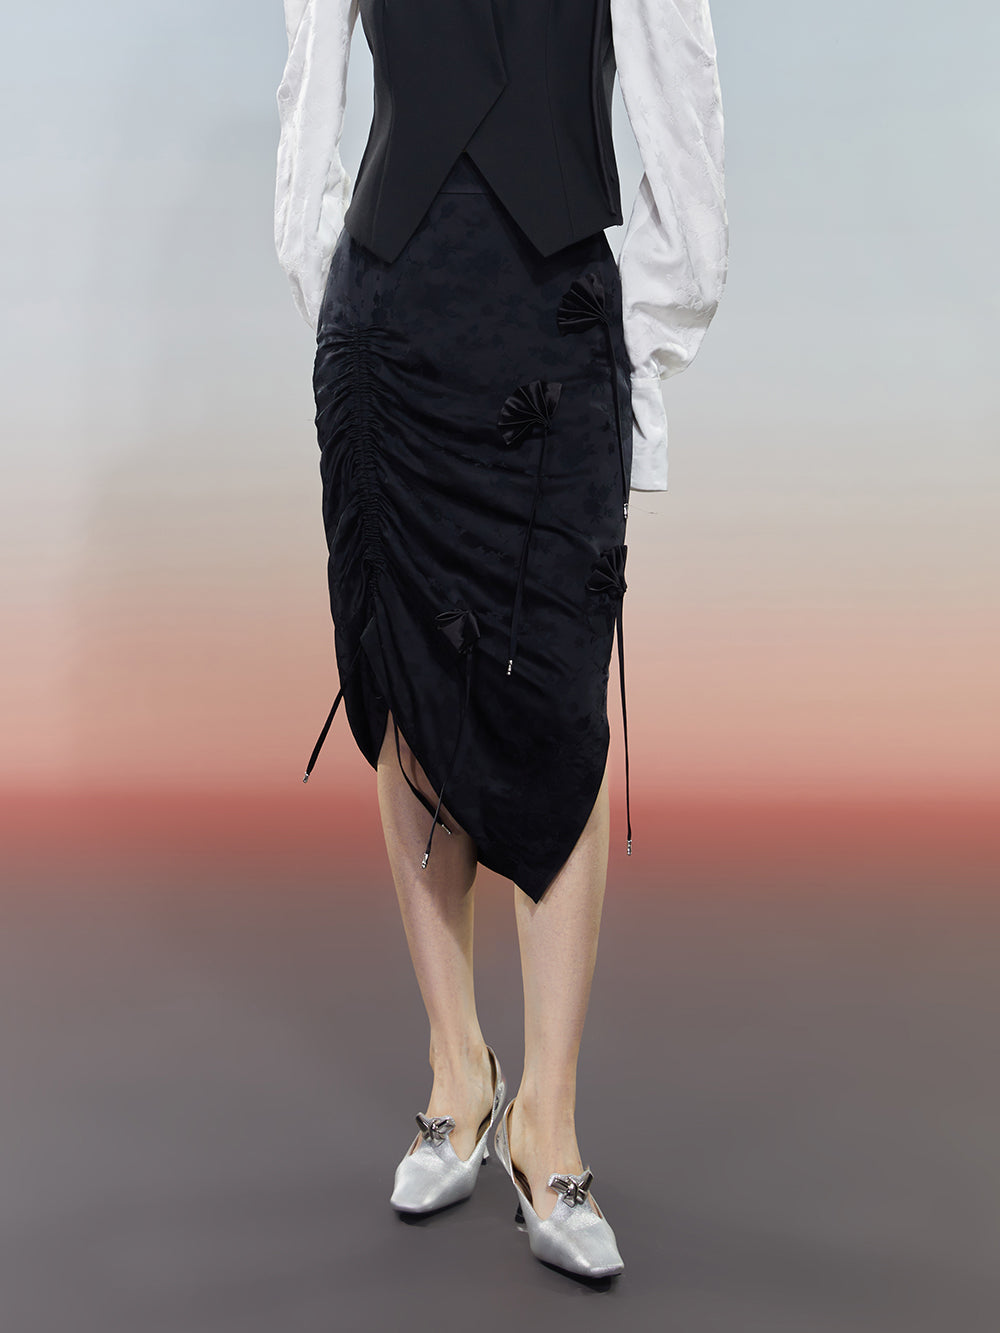 MUKZIN Tight Jacquard Slit Black Slimming Charming Skirt